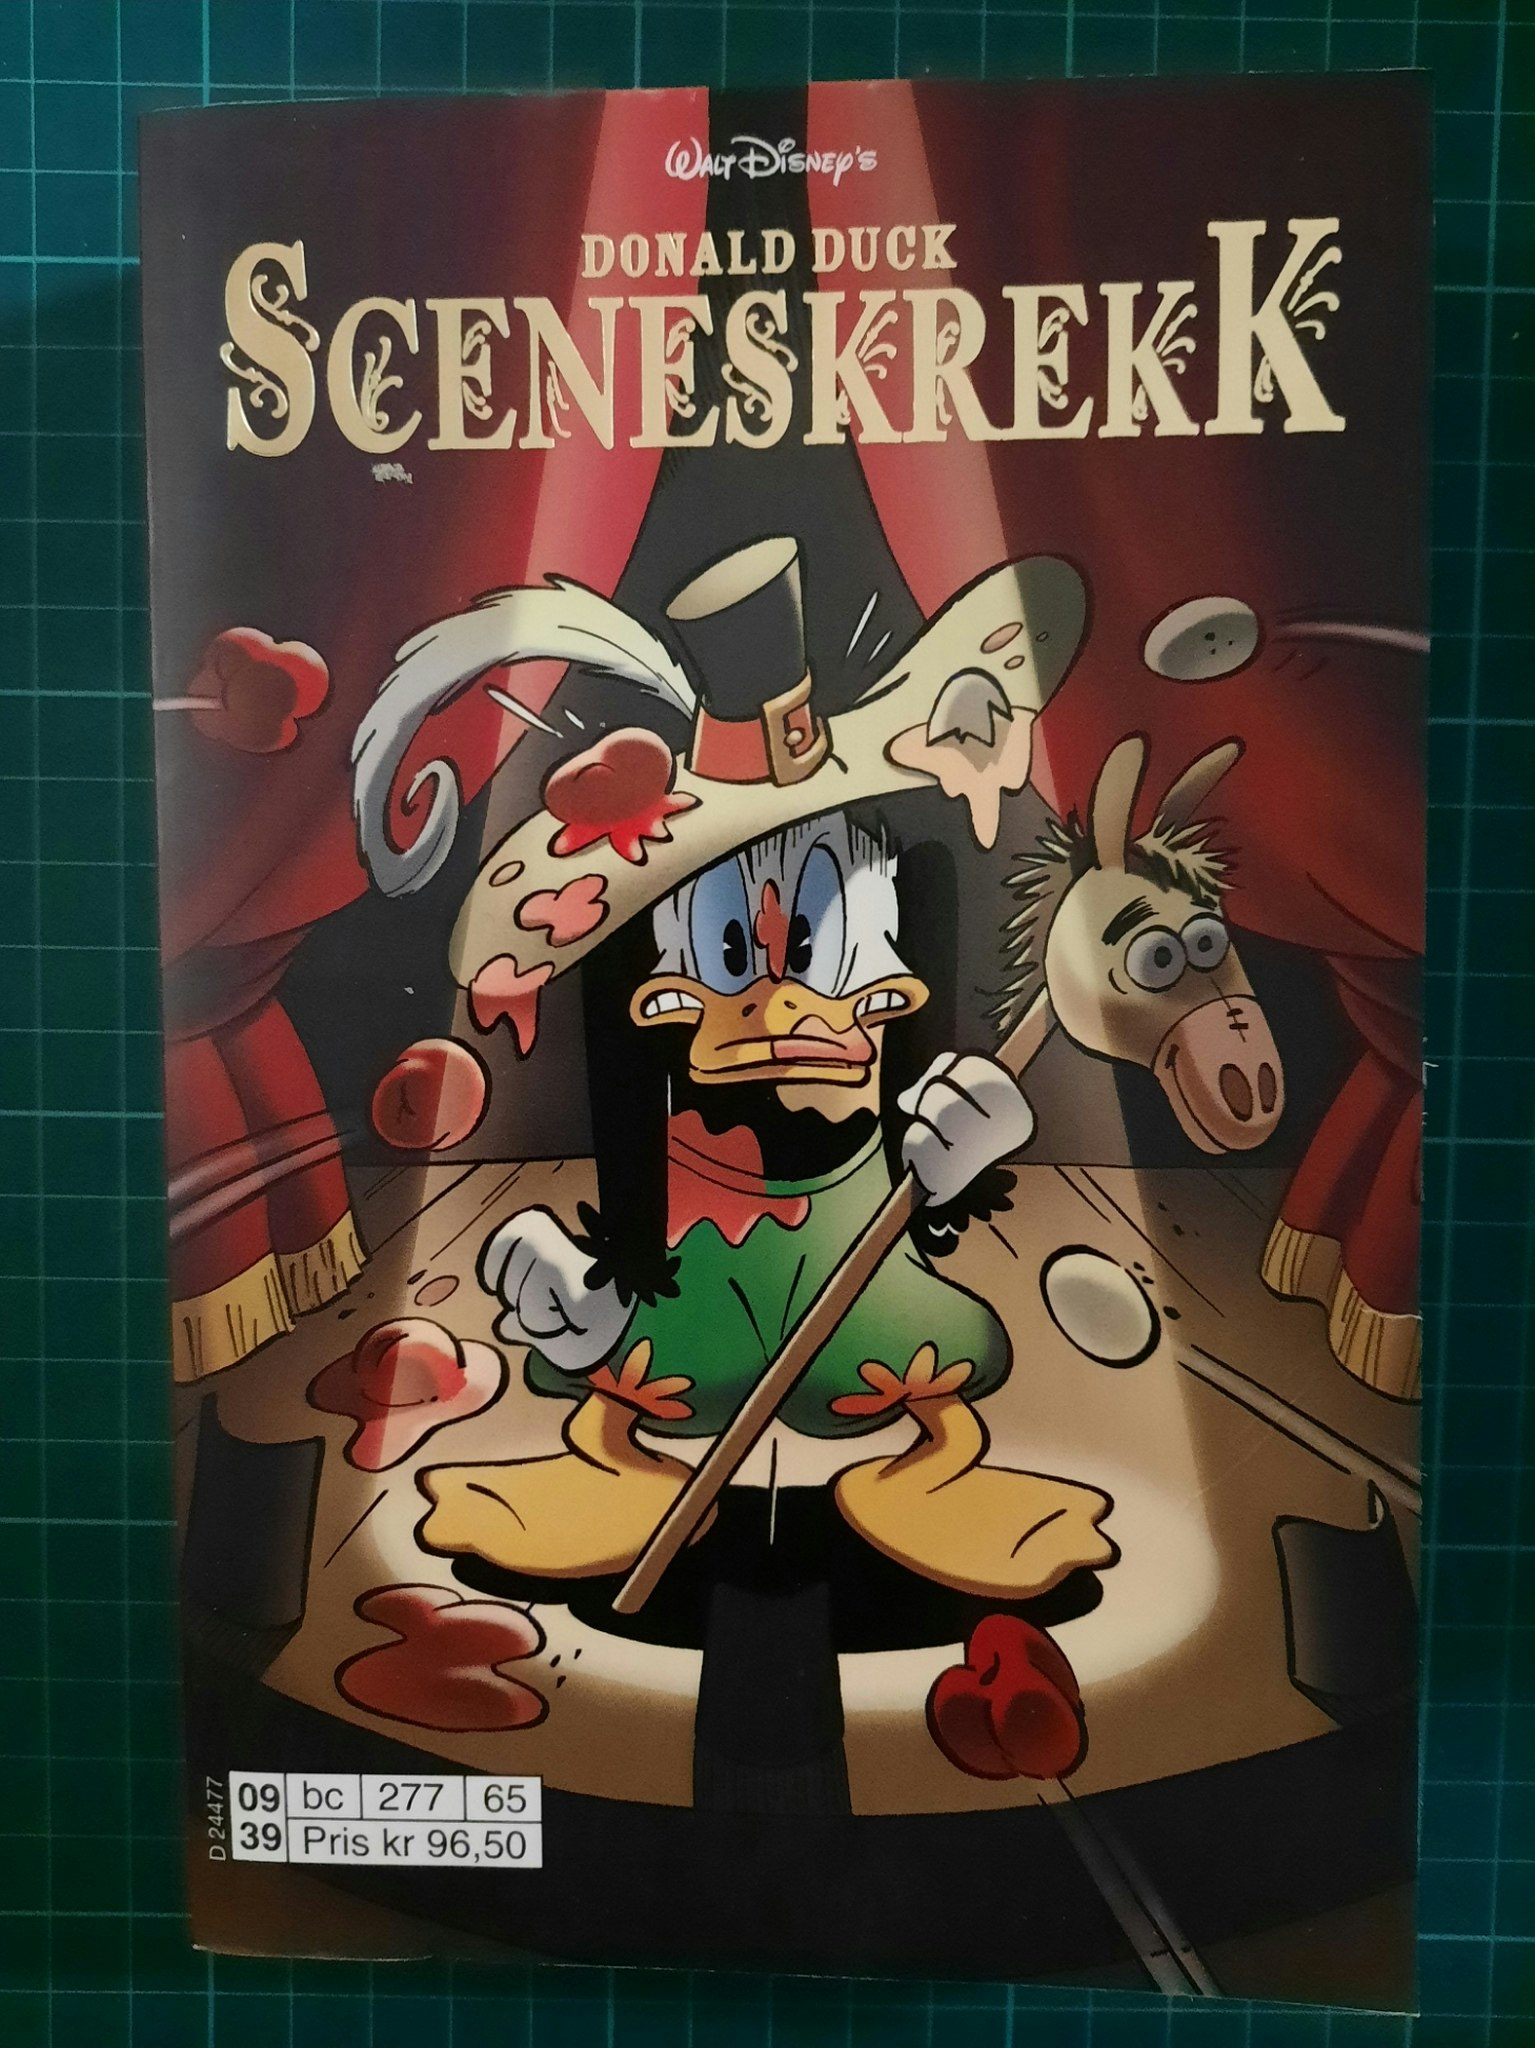 Donald Duck sceneskrekk